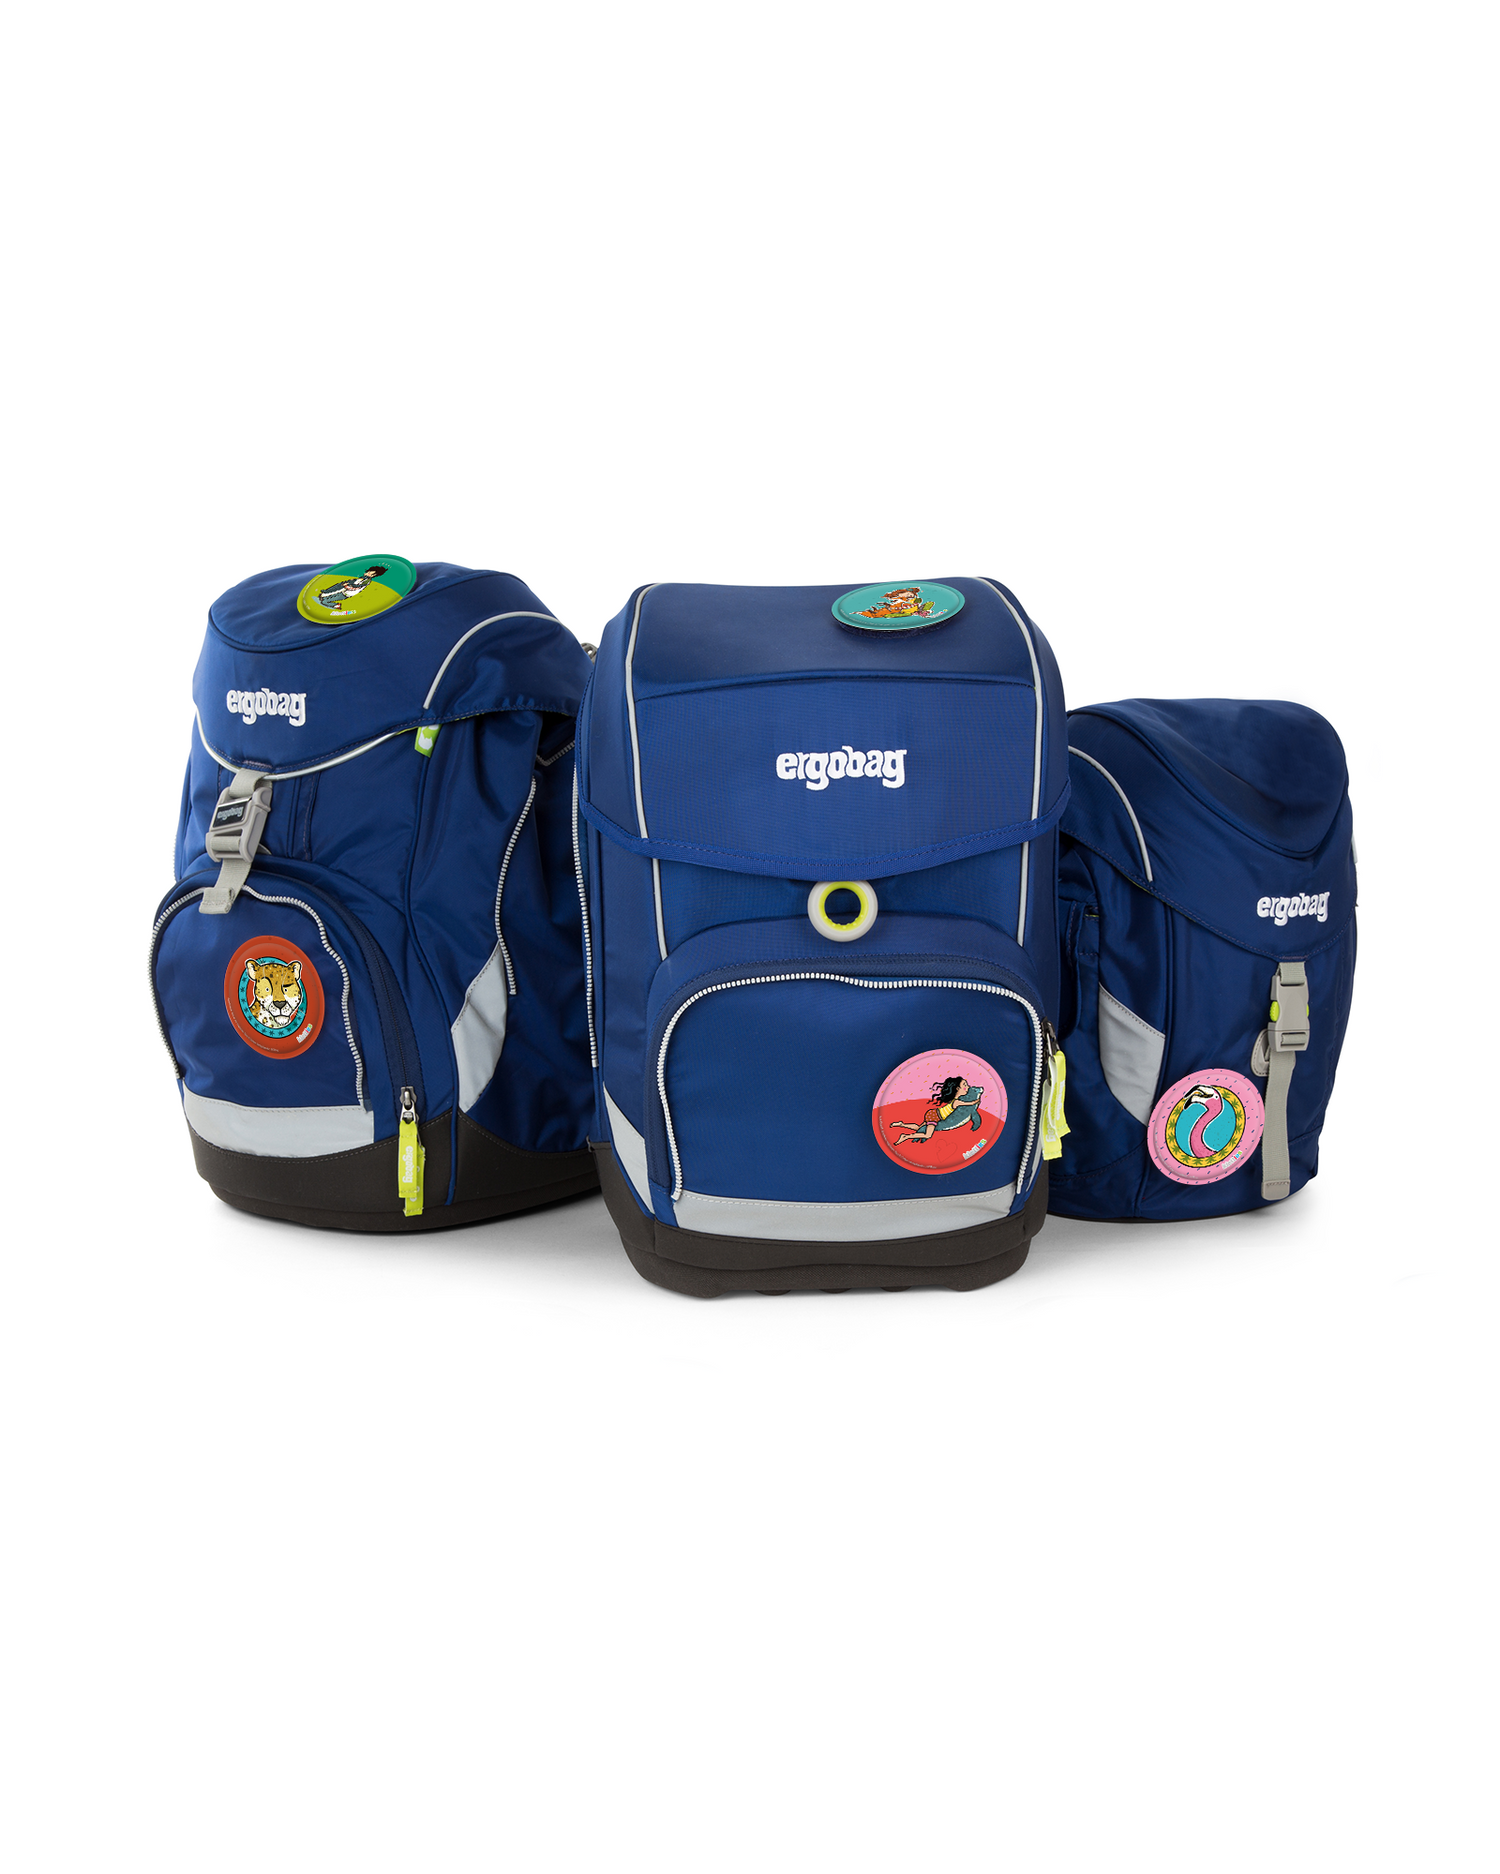 ergobag backpacks with SdmT Kuschelzeit Set of 5 Kletties